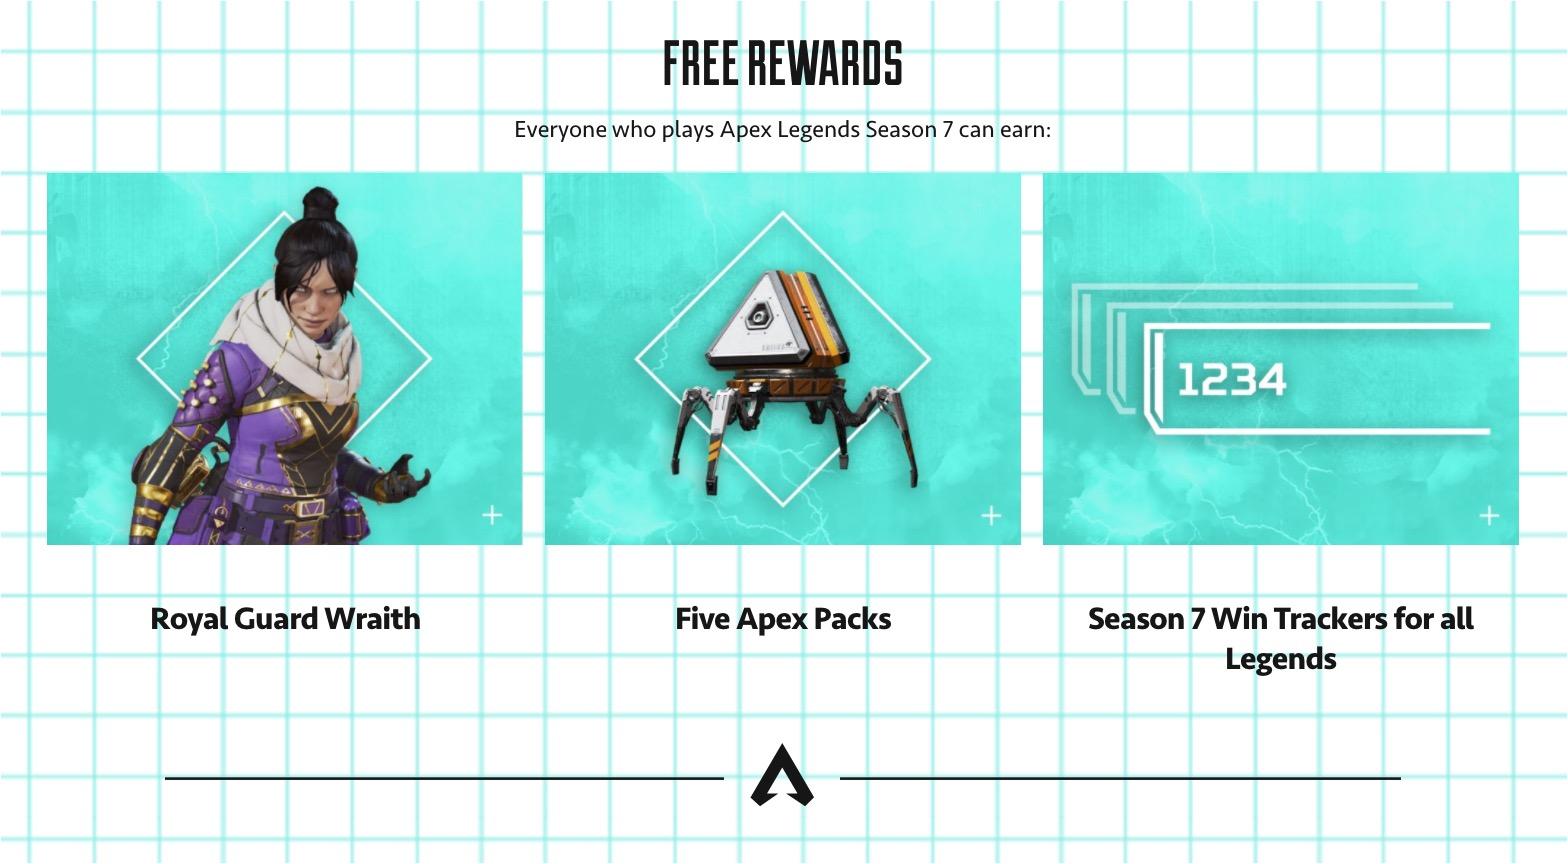 Apex Legends free rewards